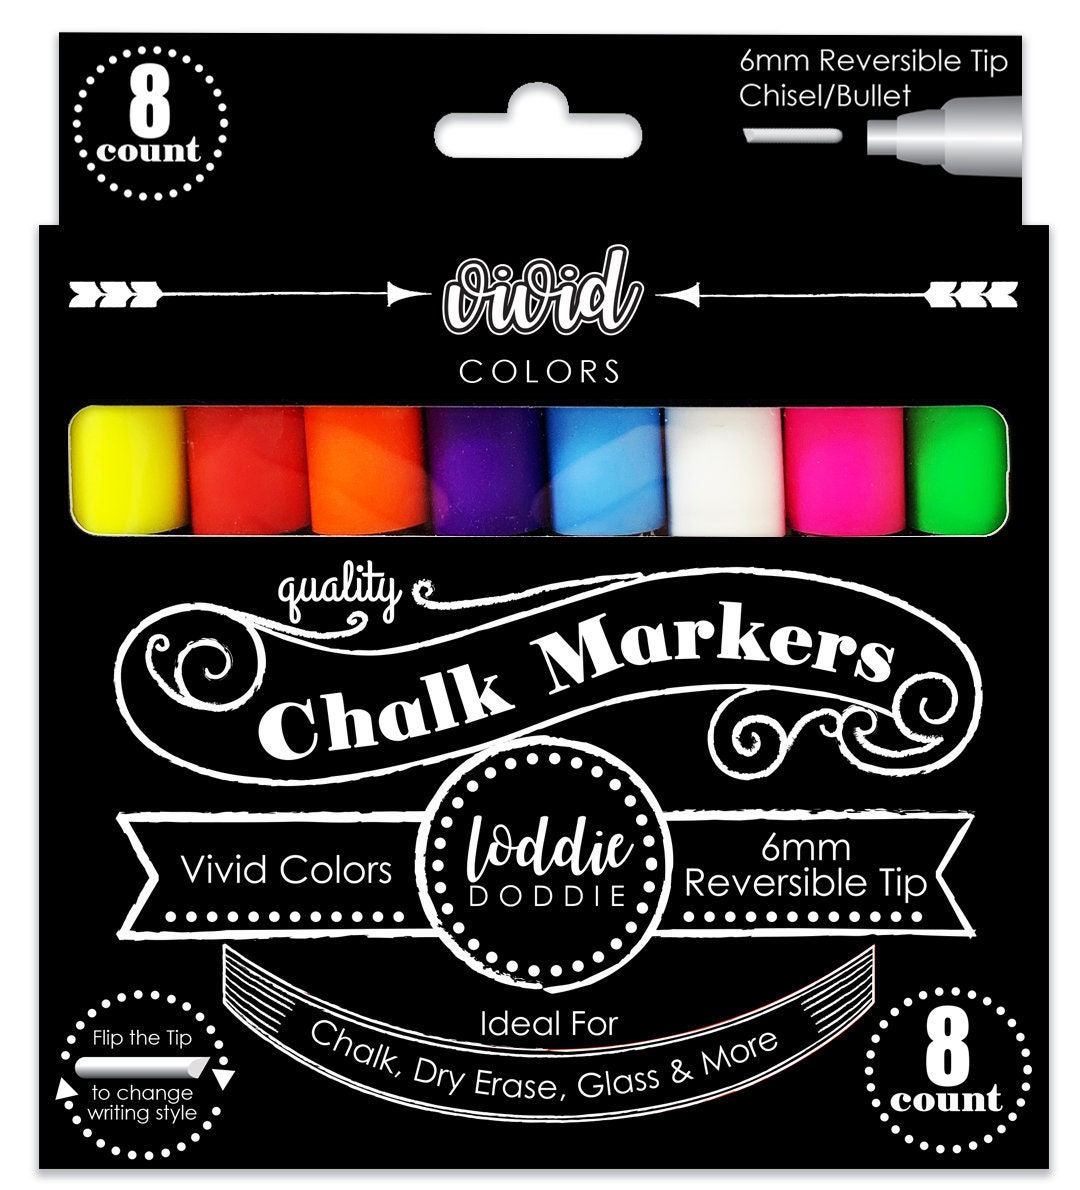 Chameleon Colors Sidewalk Chalk Paint Kit Outdoor Chalk Paint Kit for Kids 10 Vibrant Colors